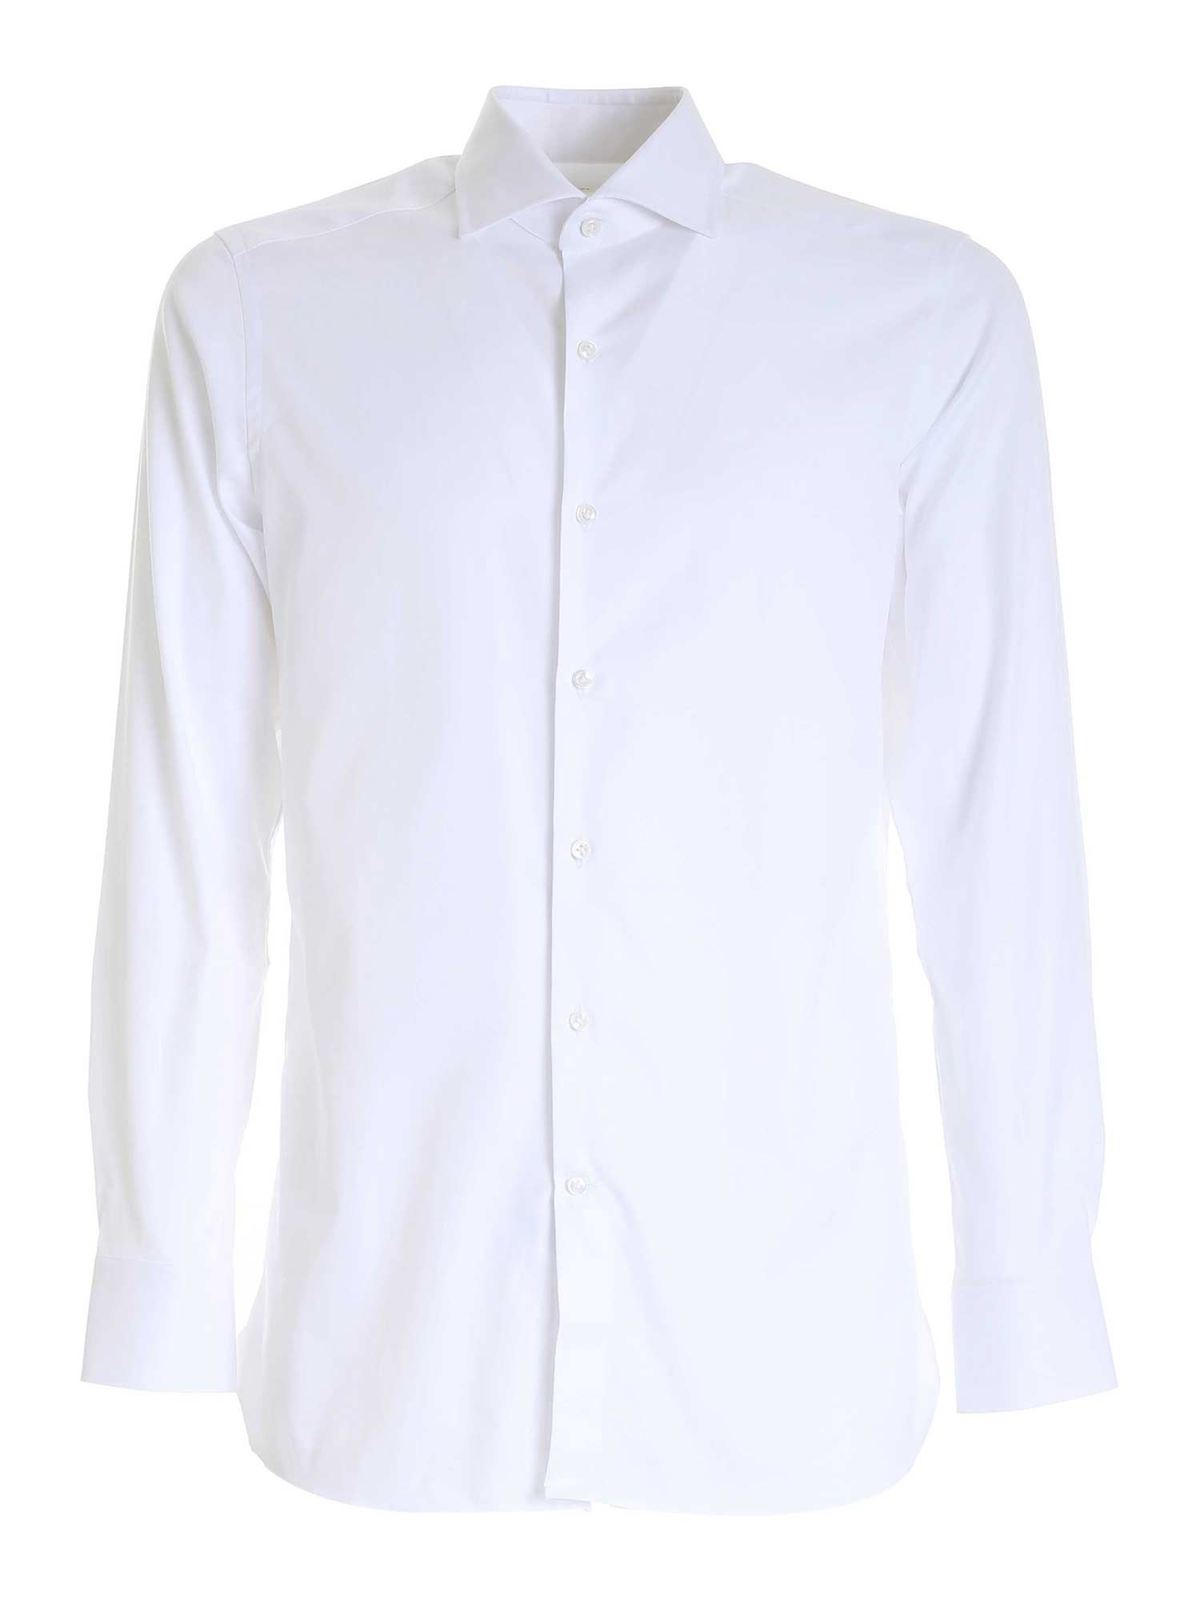 Shirts Sonrisa - French collar shirt in white - 19M26801 | iKRIX.com